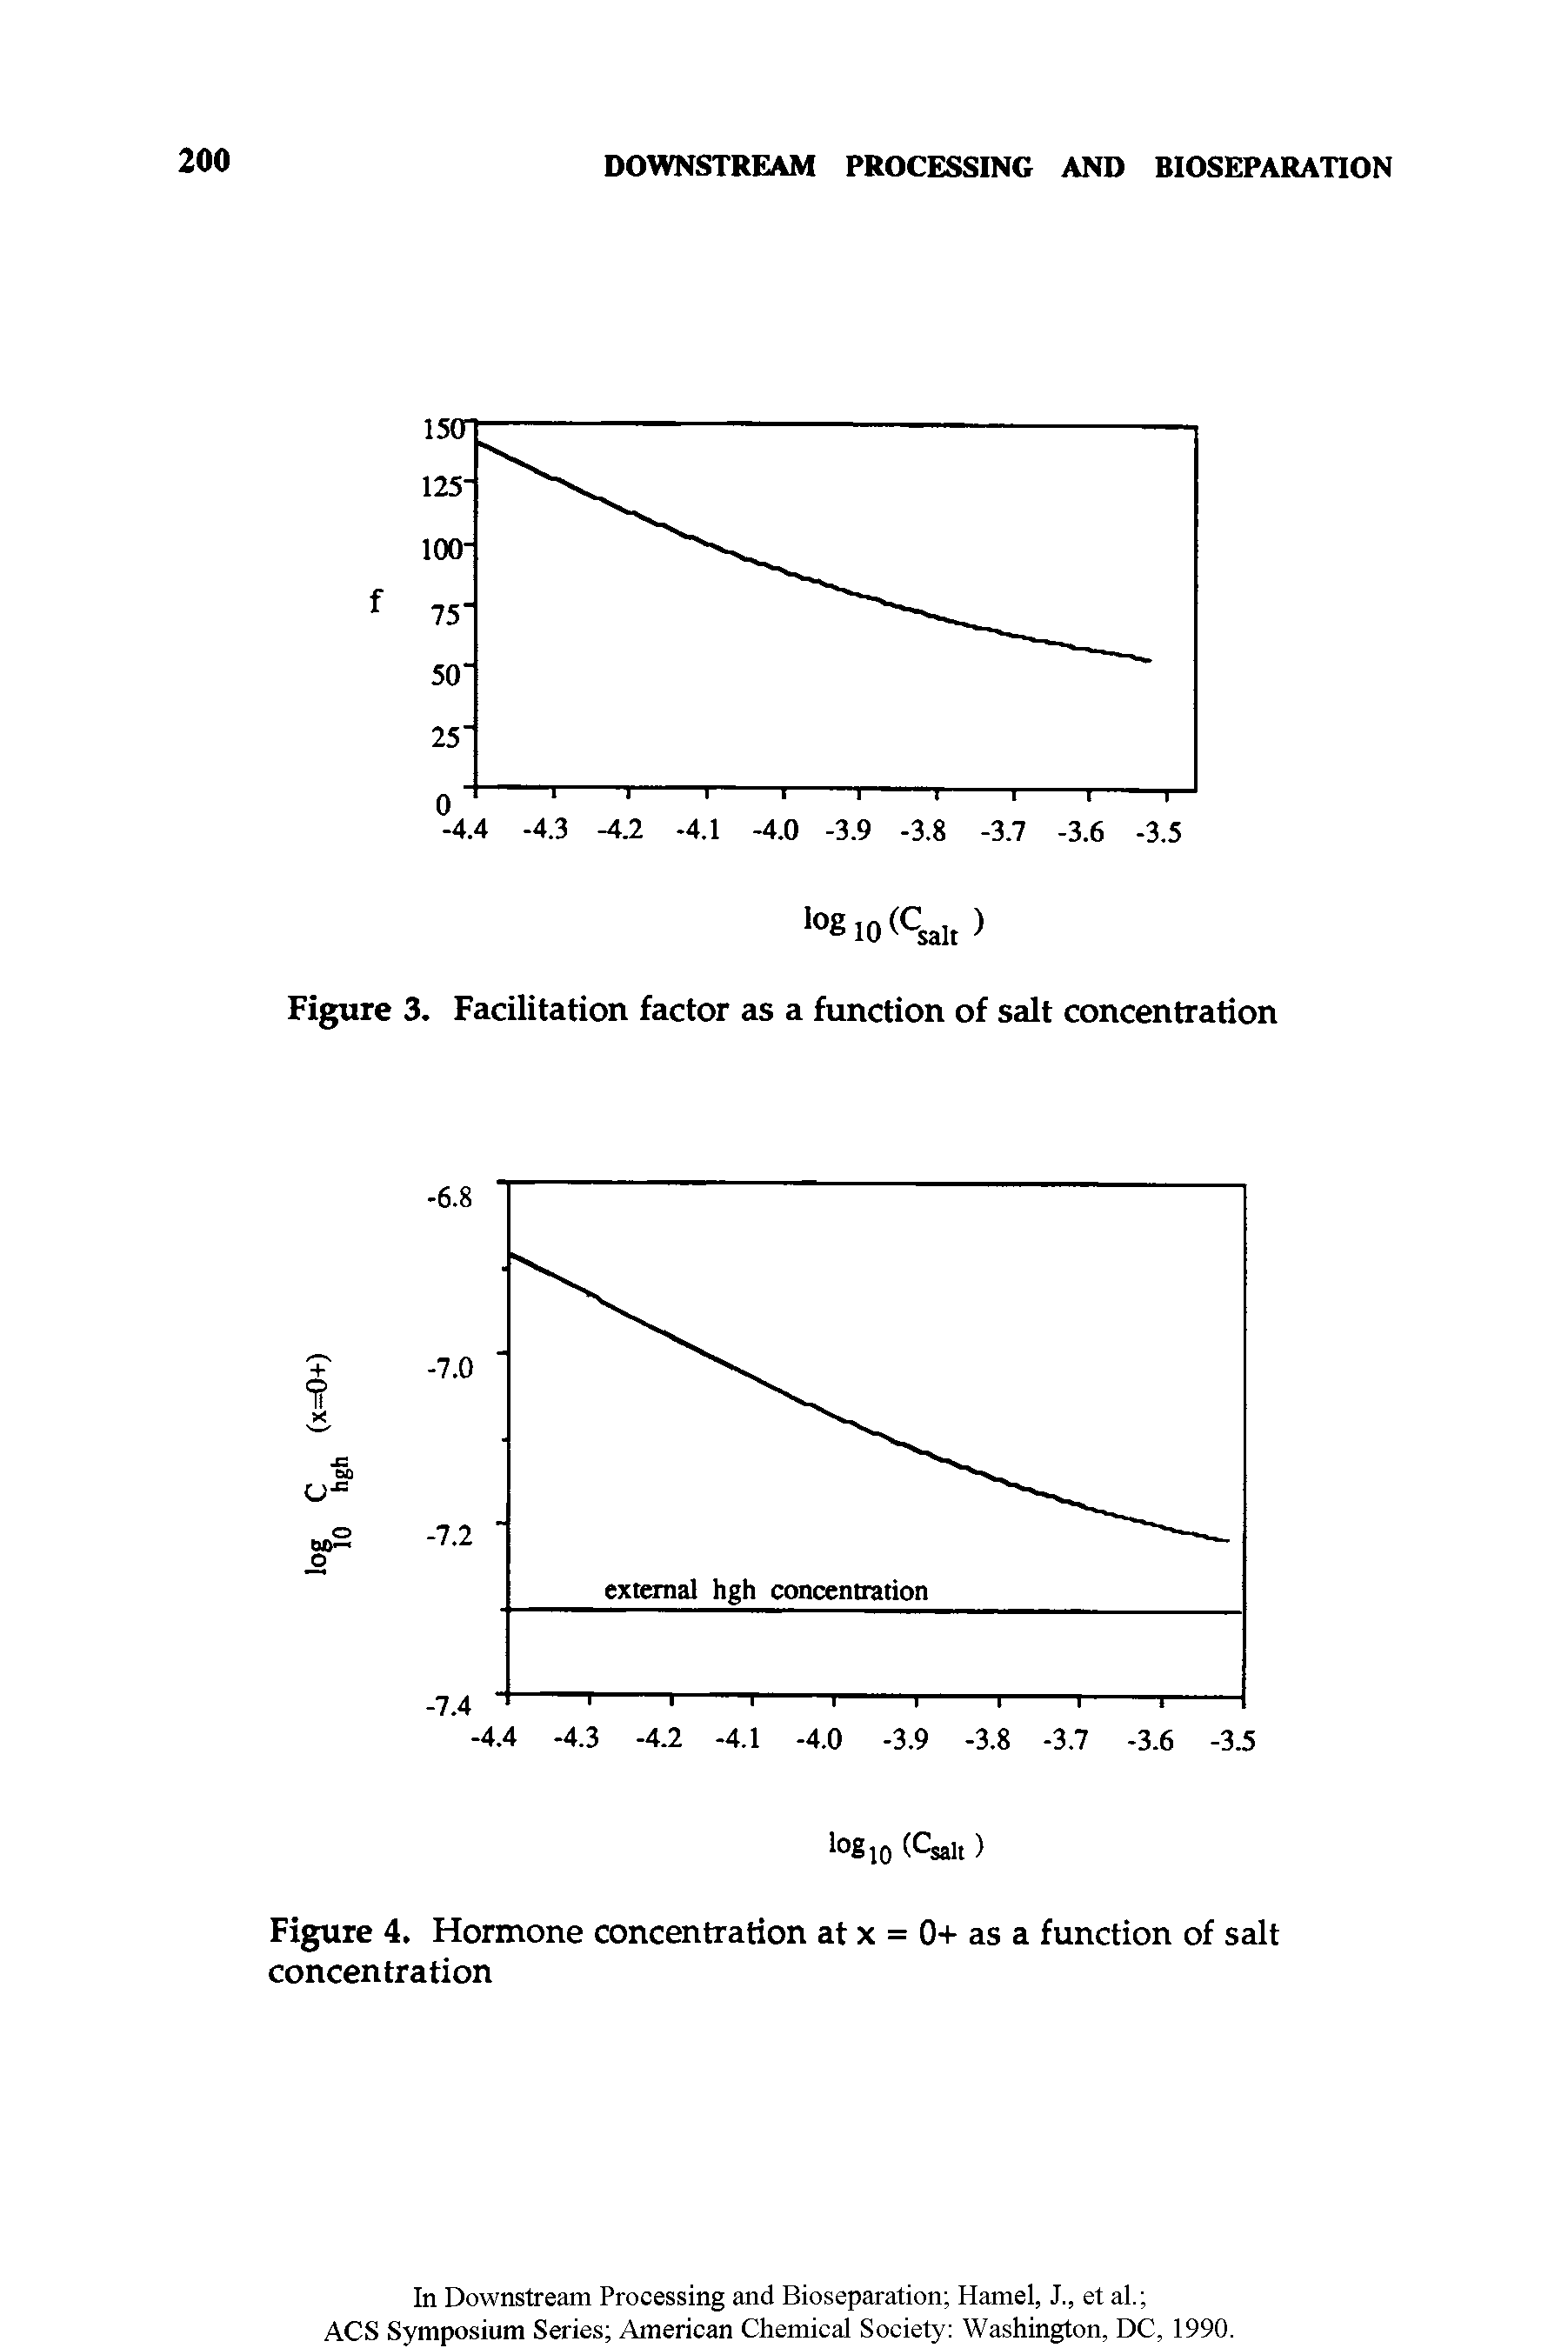 Figure 3. Facilitation factor as a function of salt concentration...